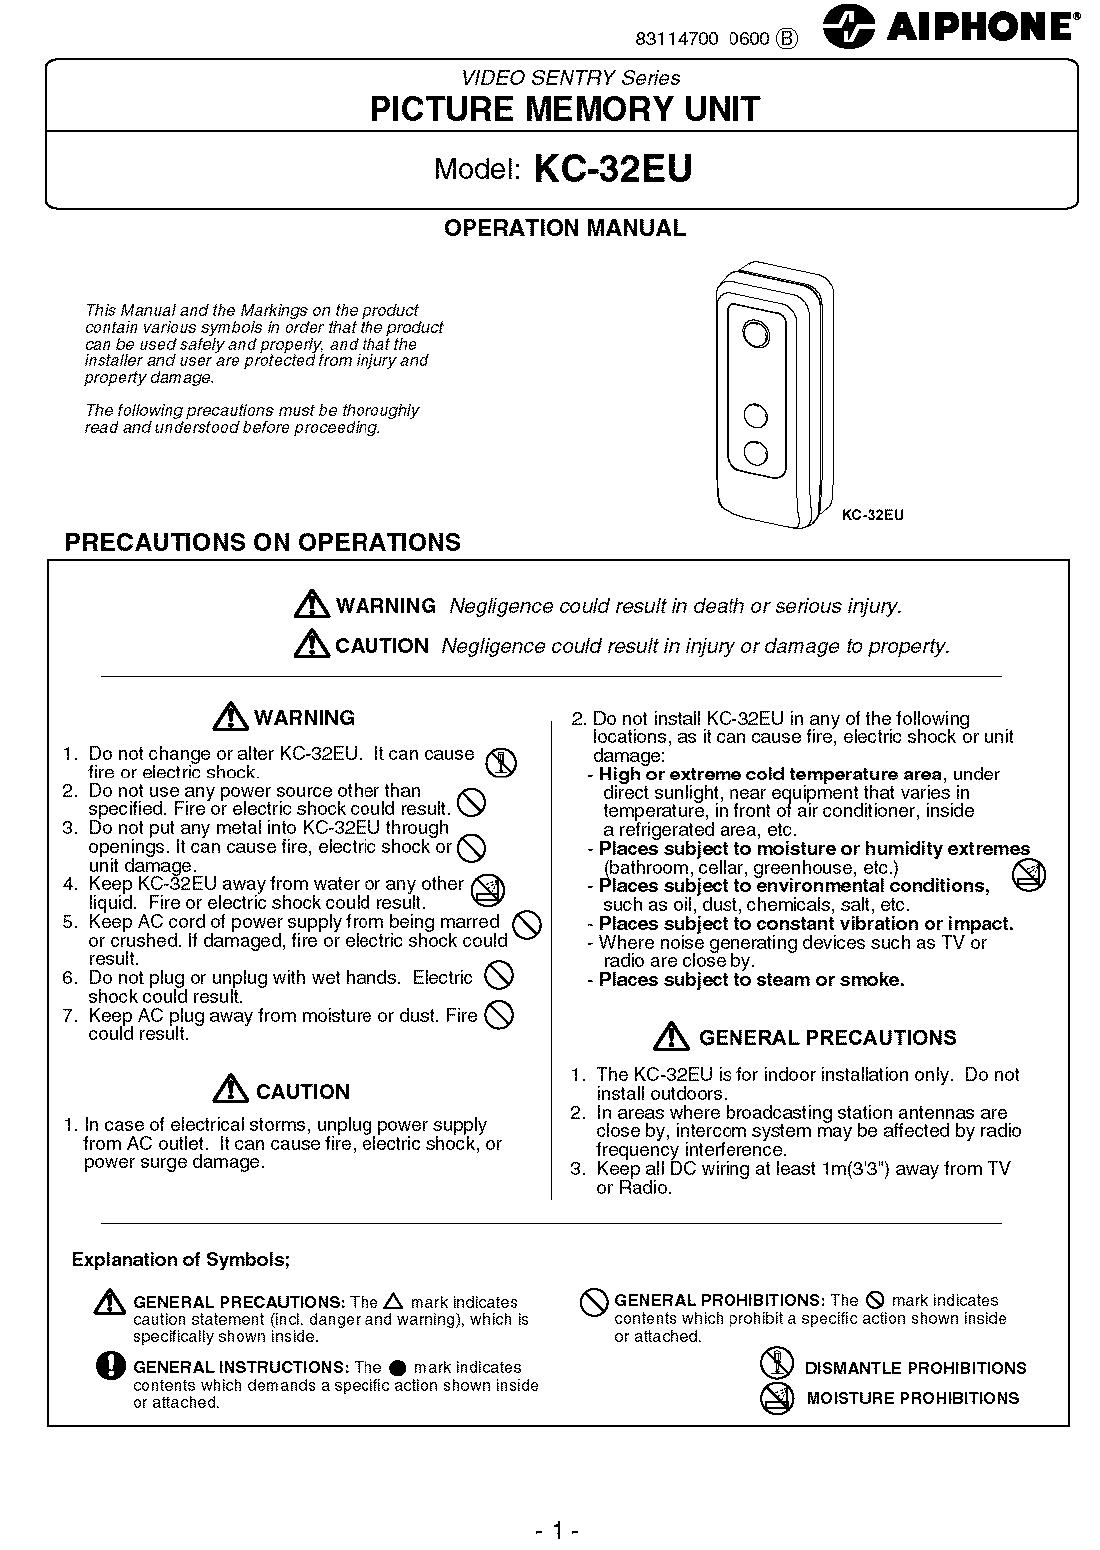 Aiphone KC-32EU Photo Scanner User Manual